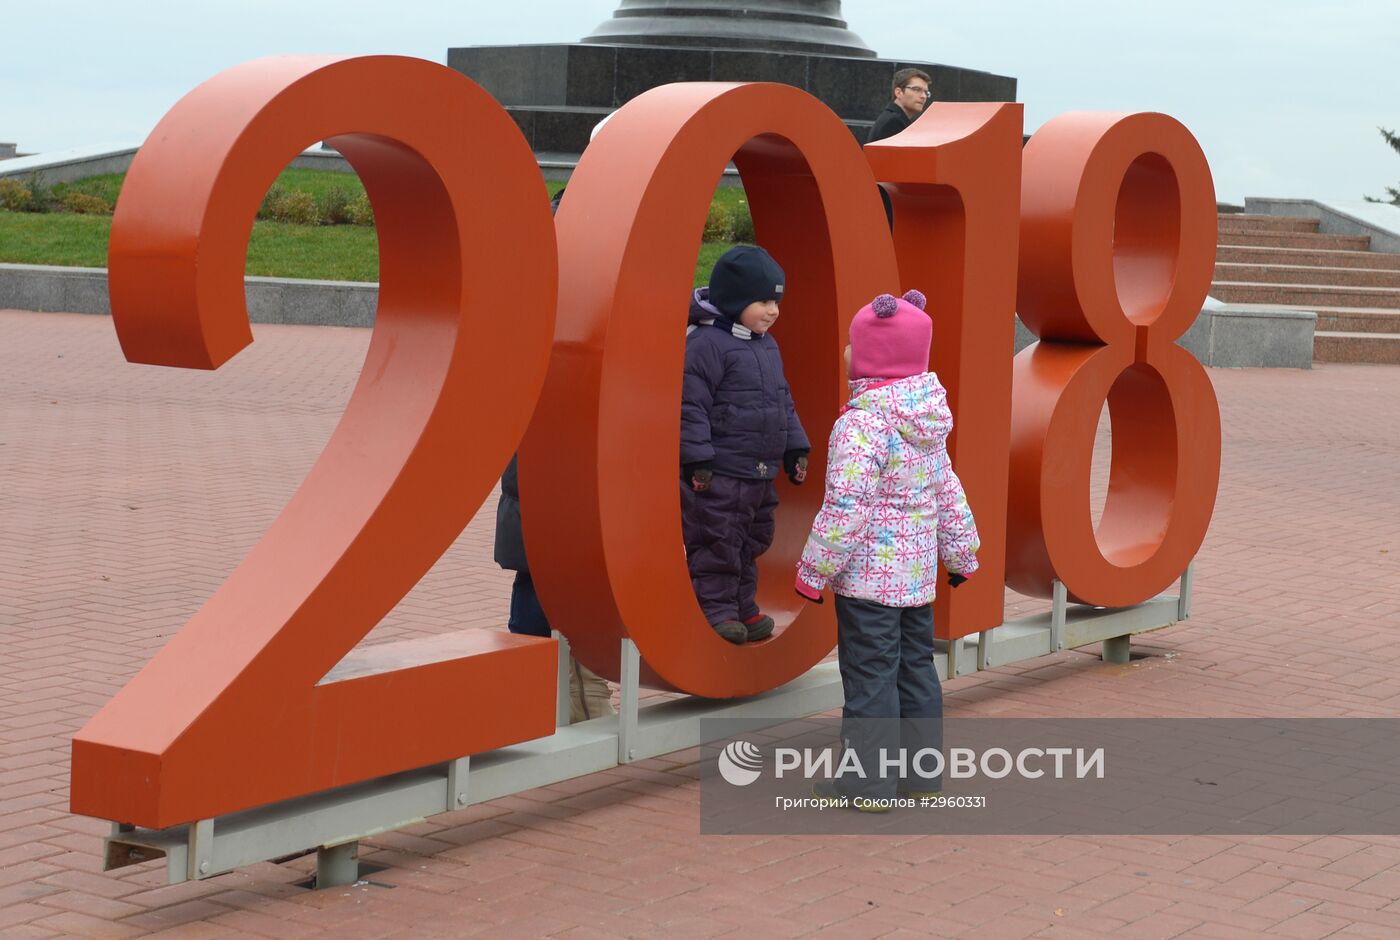 Инсталляция "Russia 2018" в Нижнем Новгороде